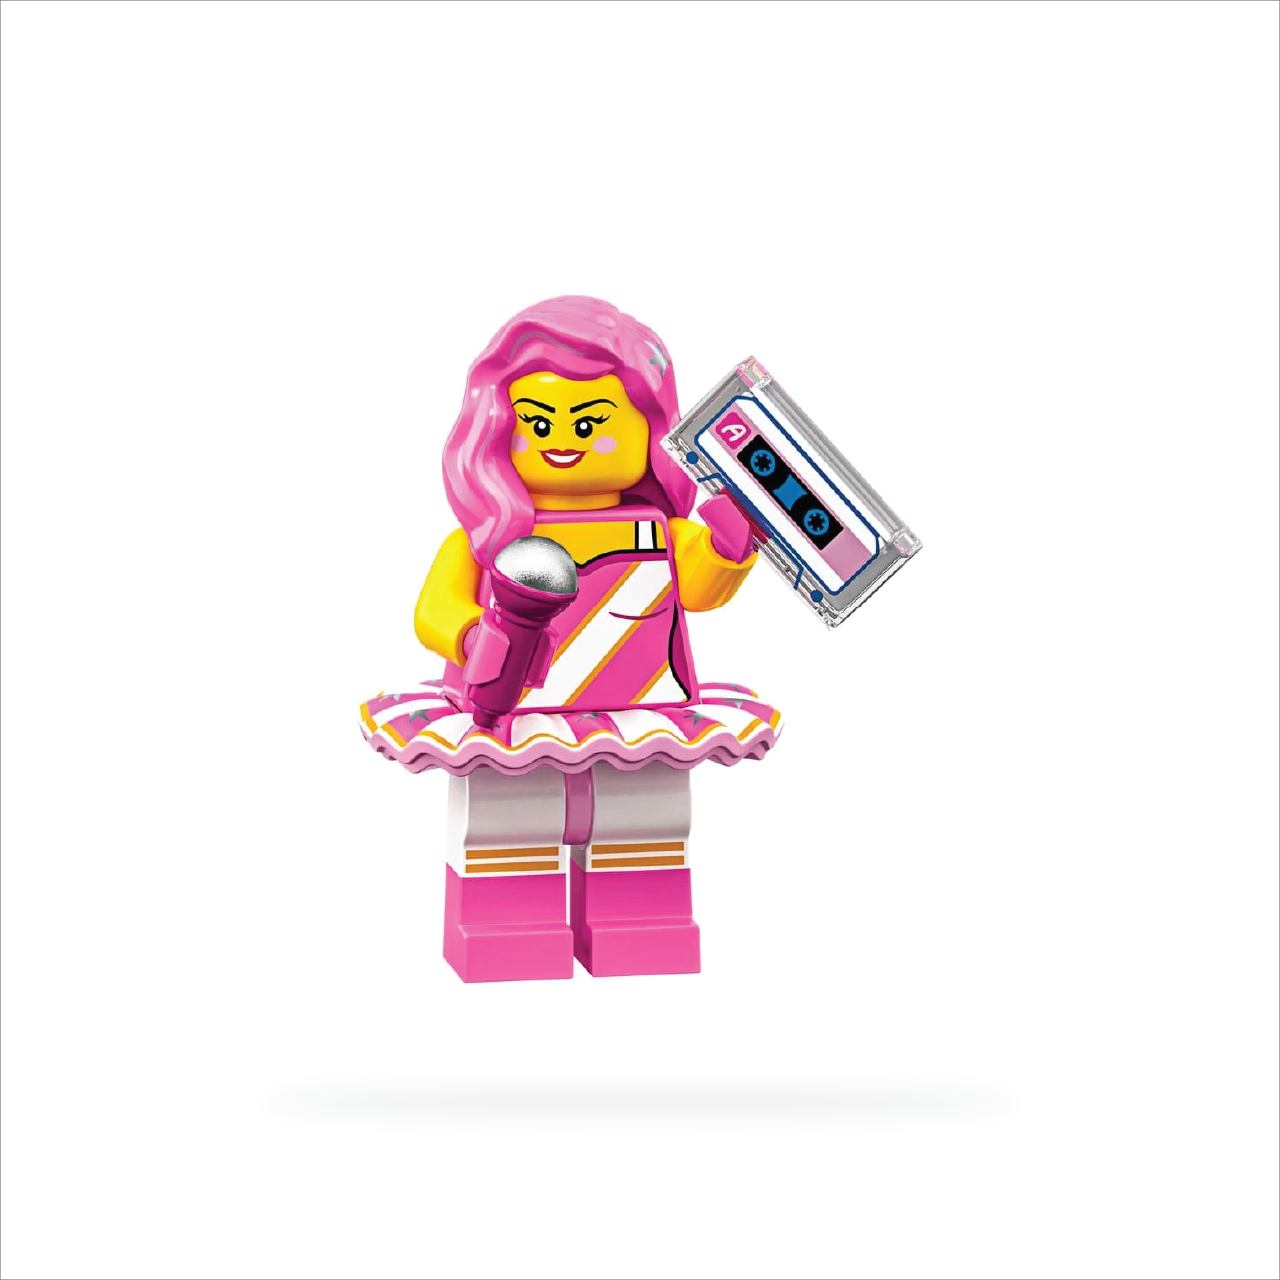 LEGO 71023-11 Minifigure The LEGO Movie 2 - Candy Rapper